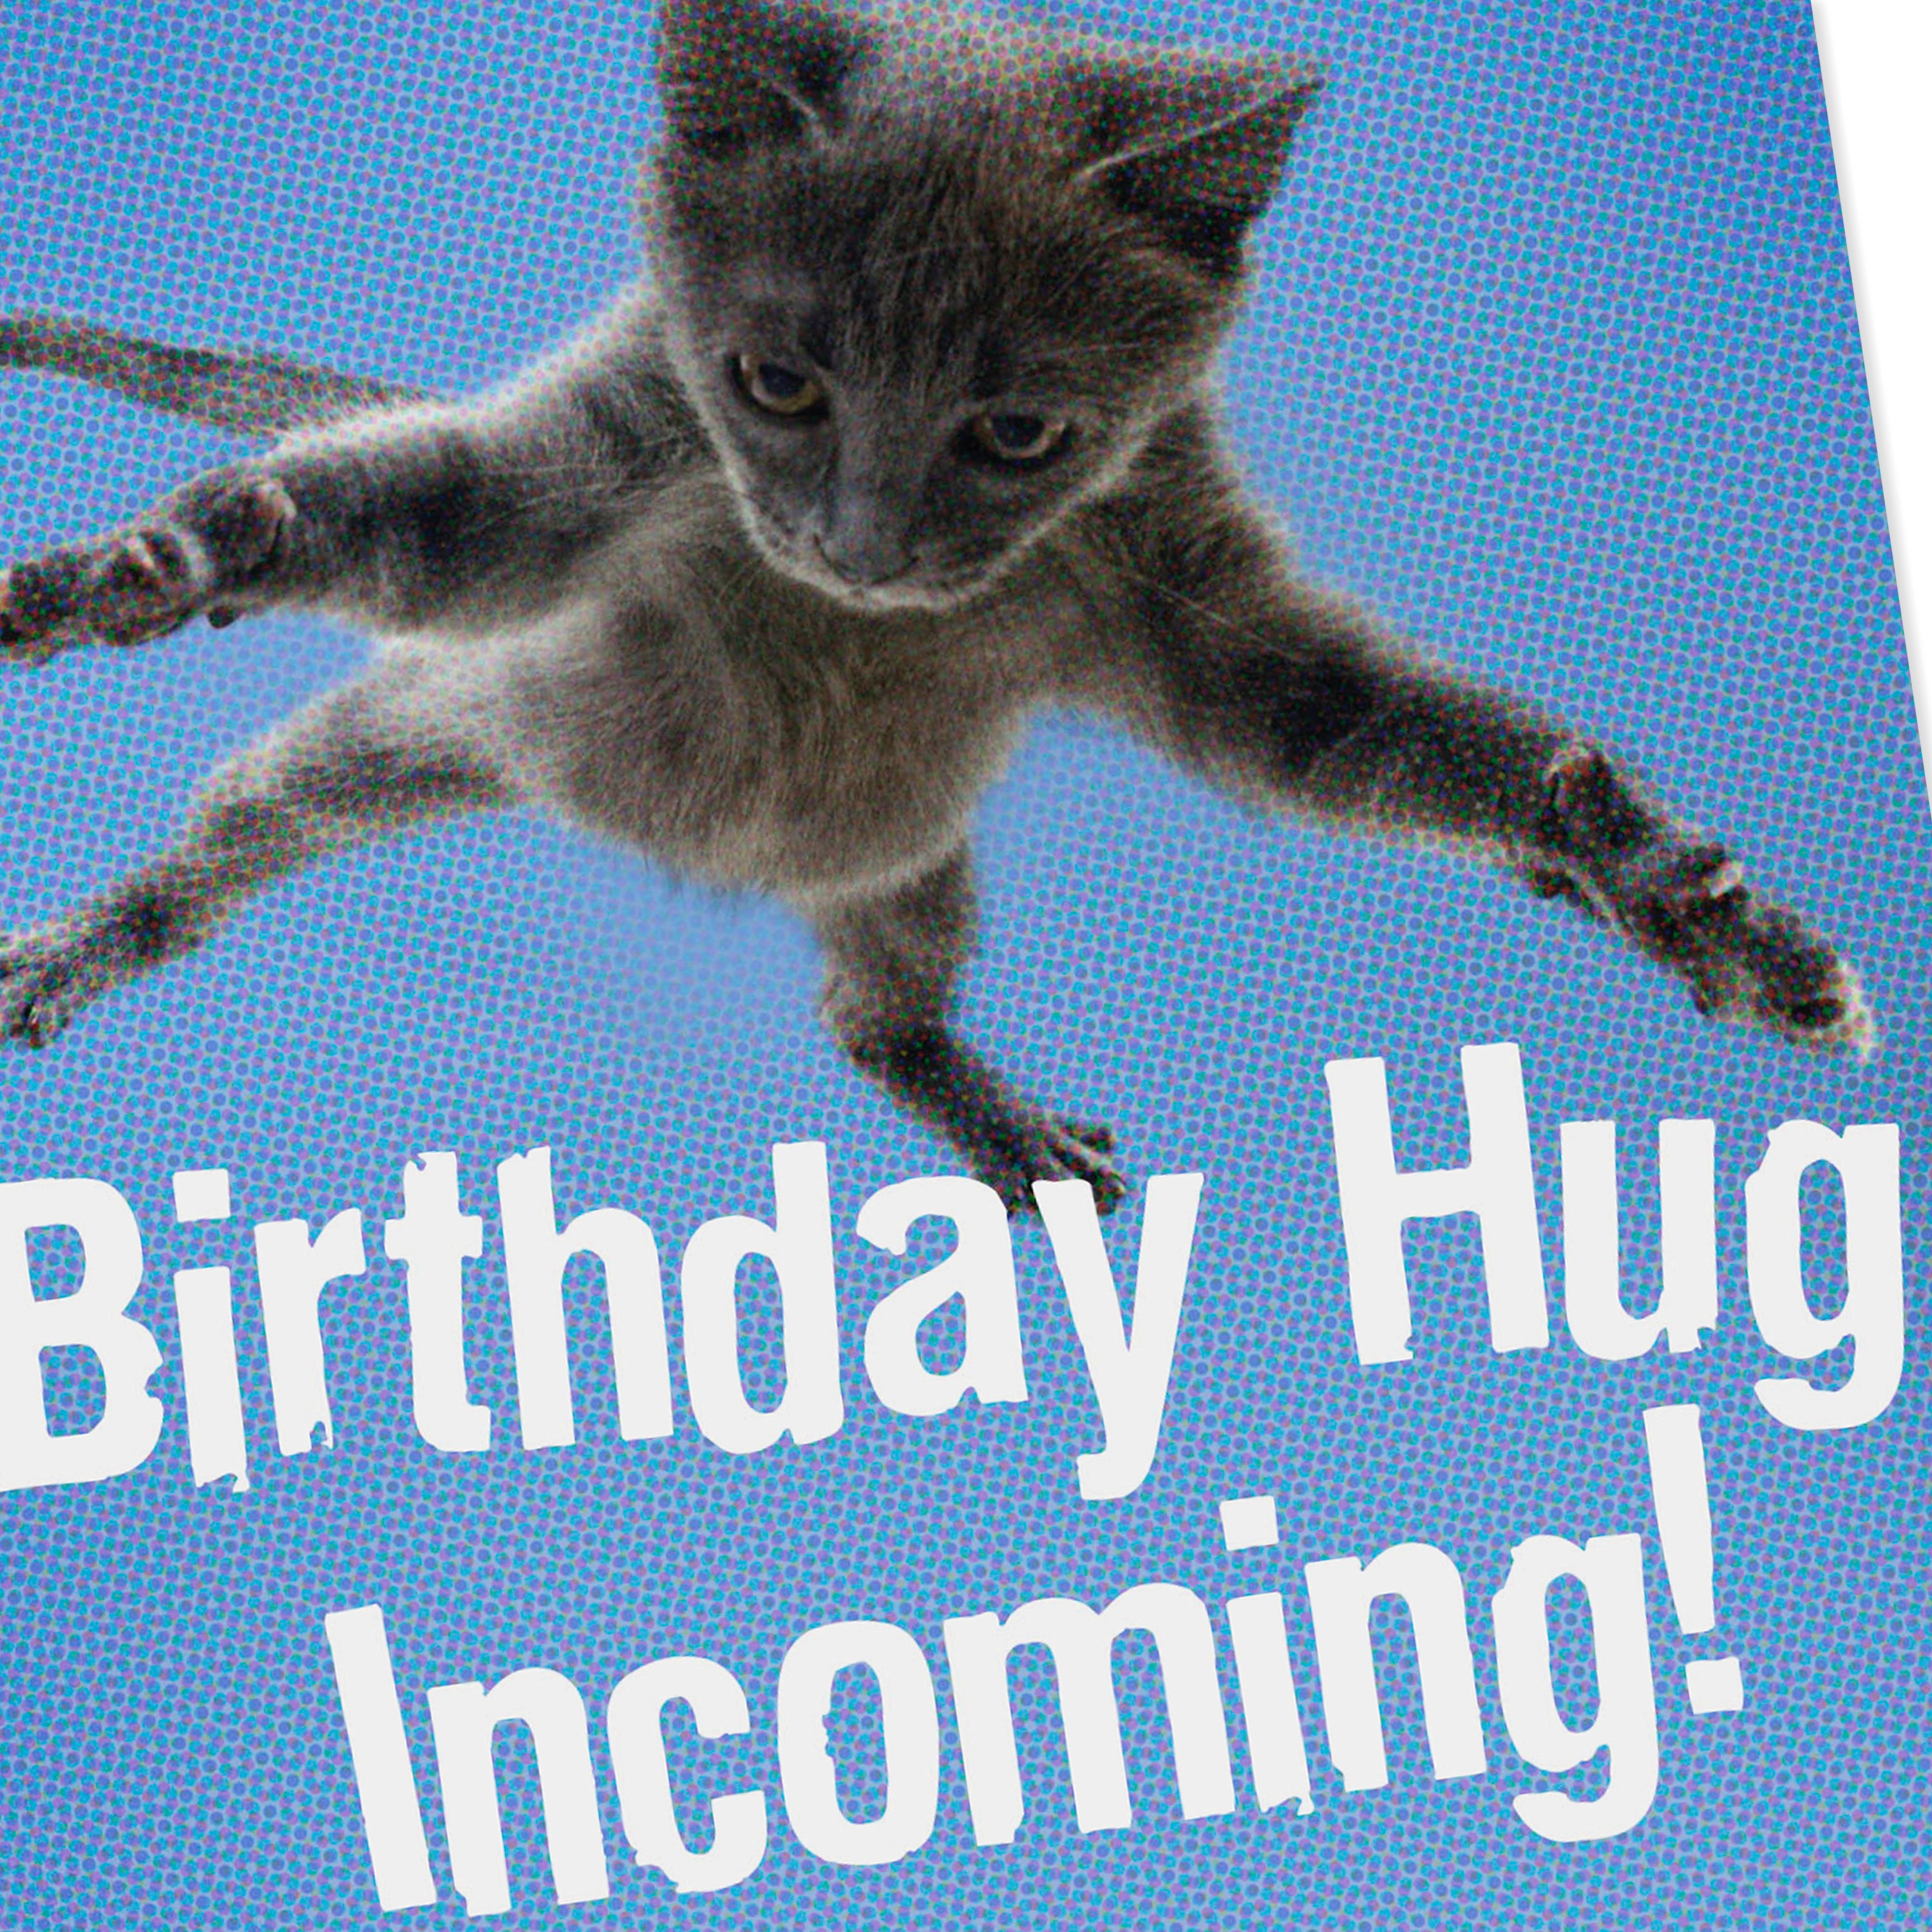 Shoebox Funny Birthday Card (Flying Cat)